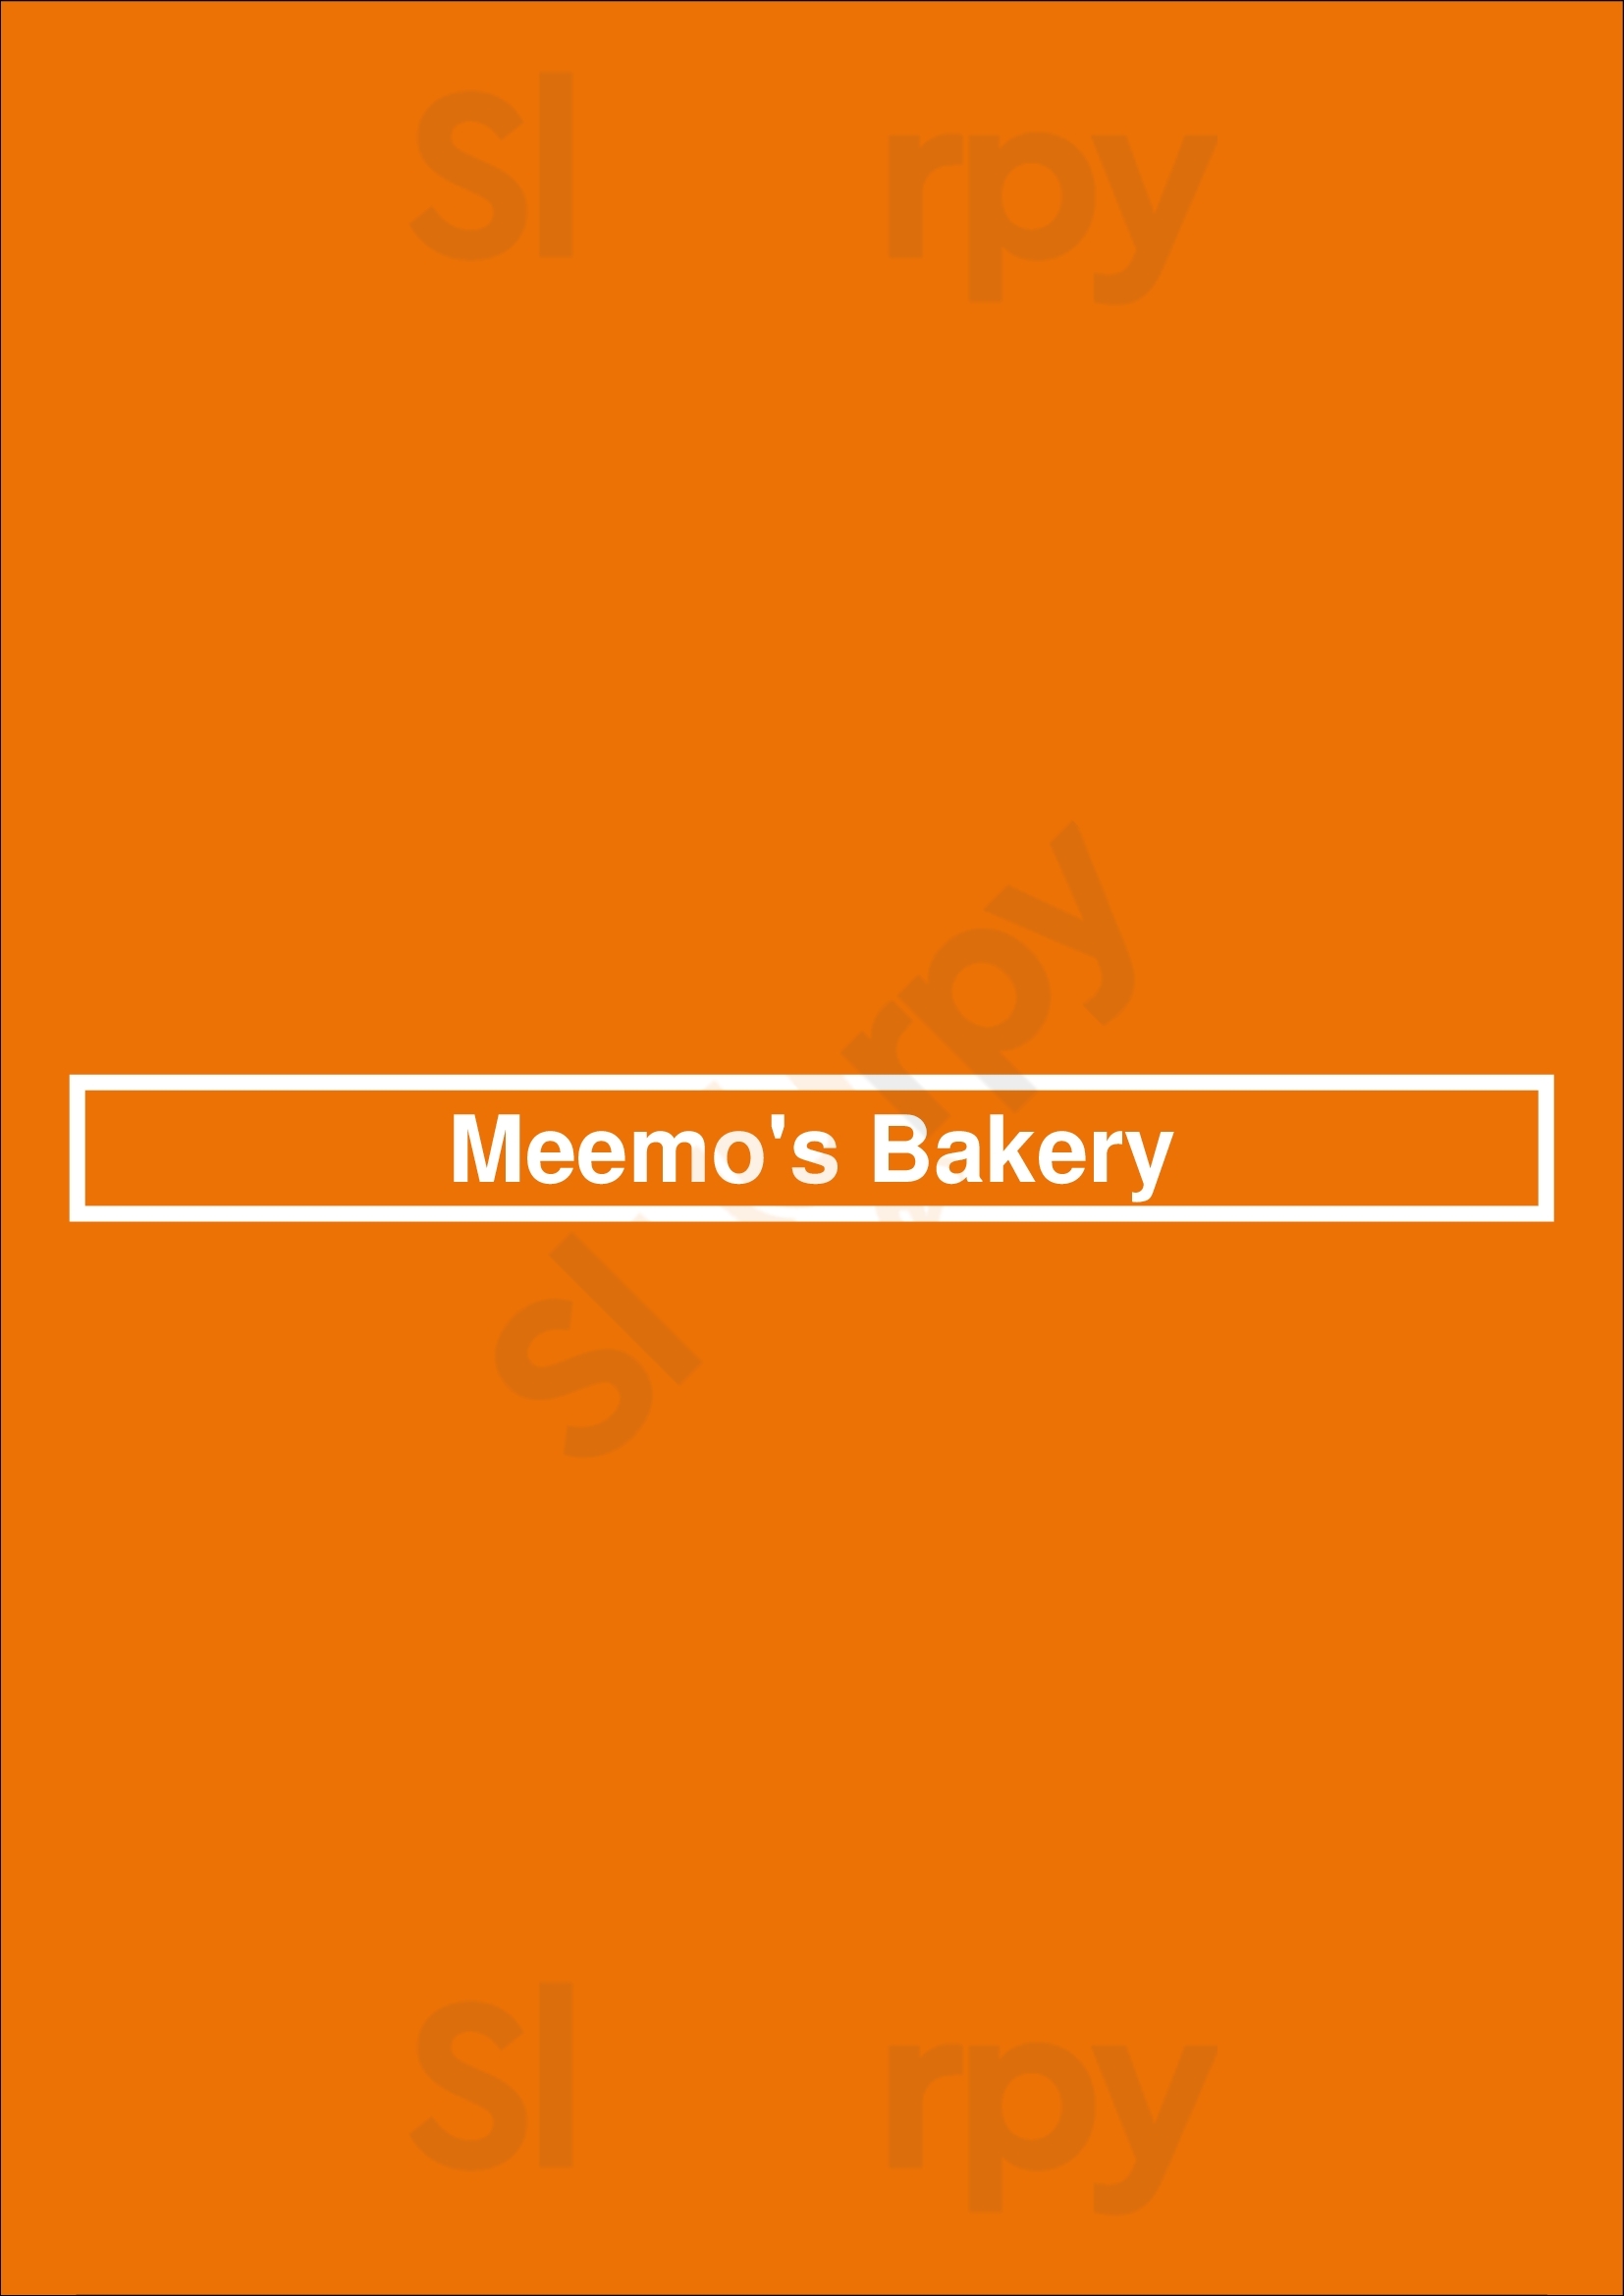 Meemo's Bakery San Antonio Menu - 1